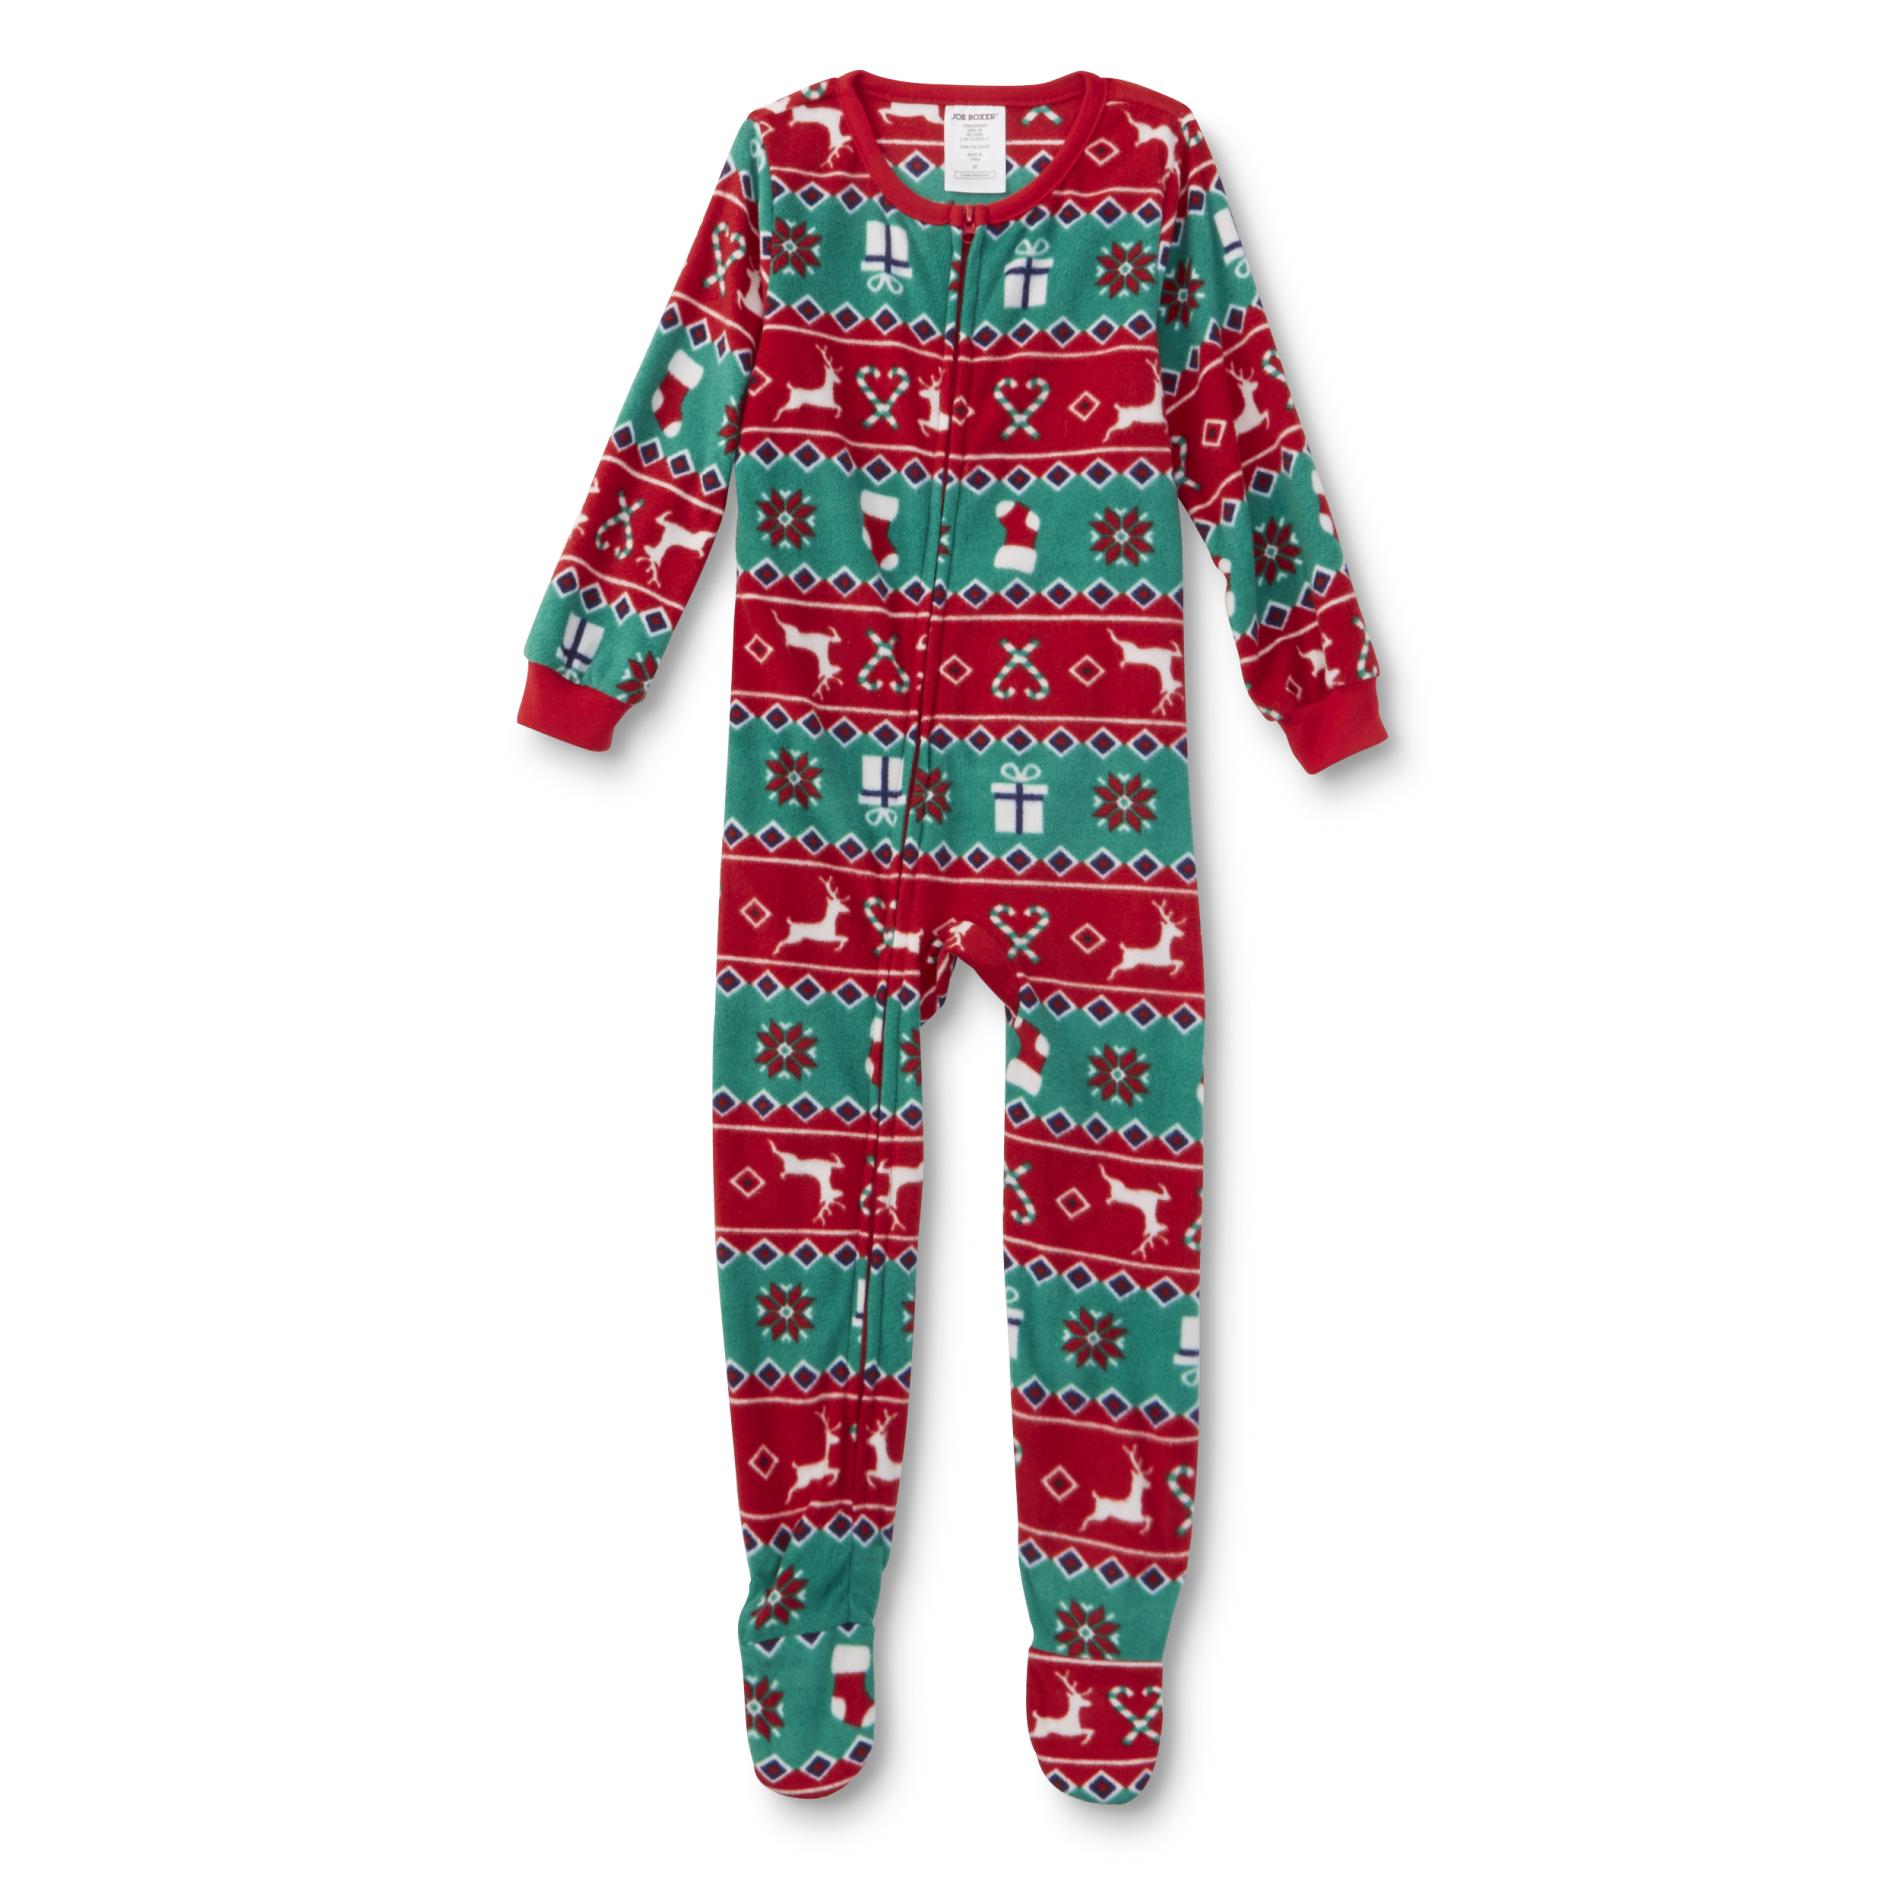 Joe Boxer Infant & Toddler's Christmas Sleeper Pajamas - Presents